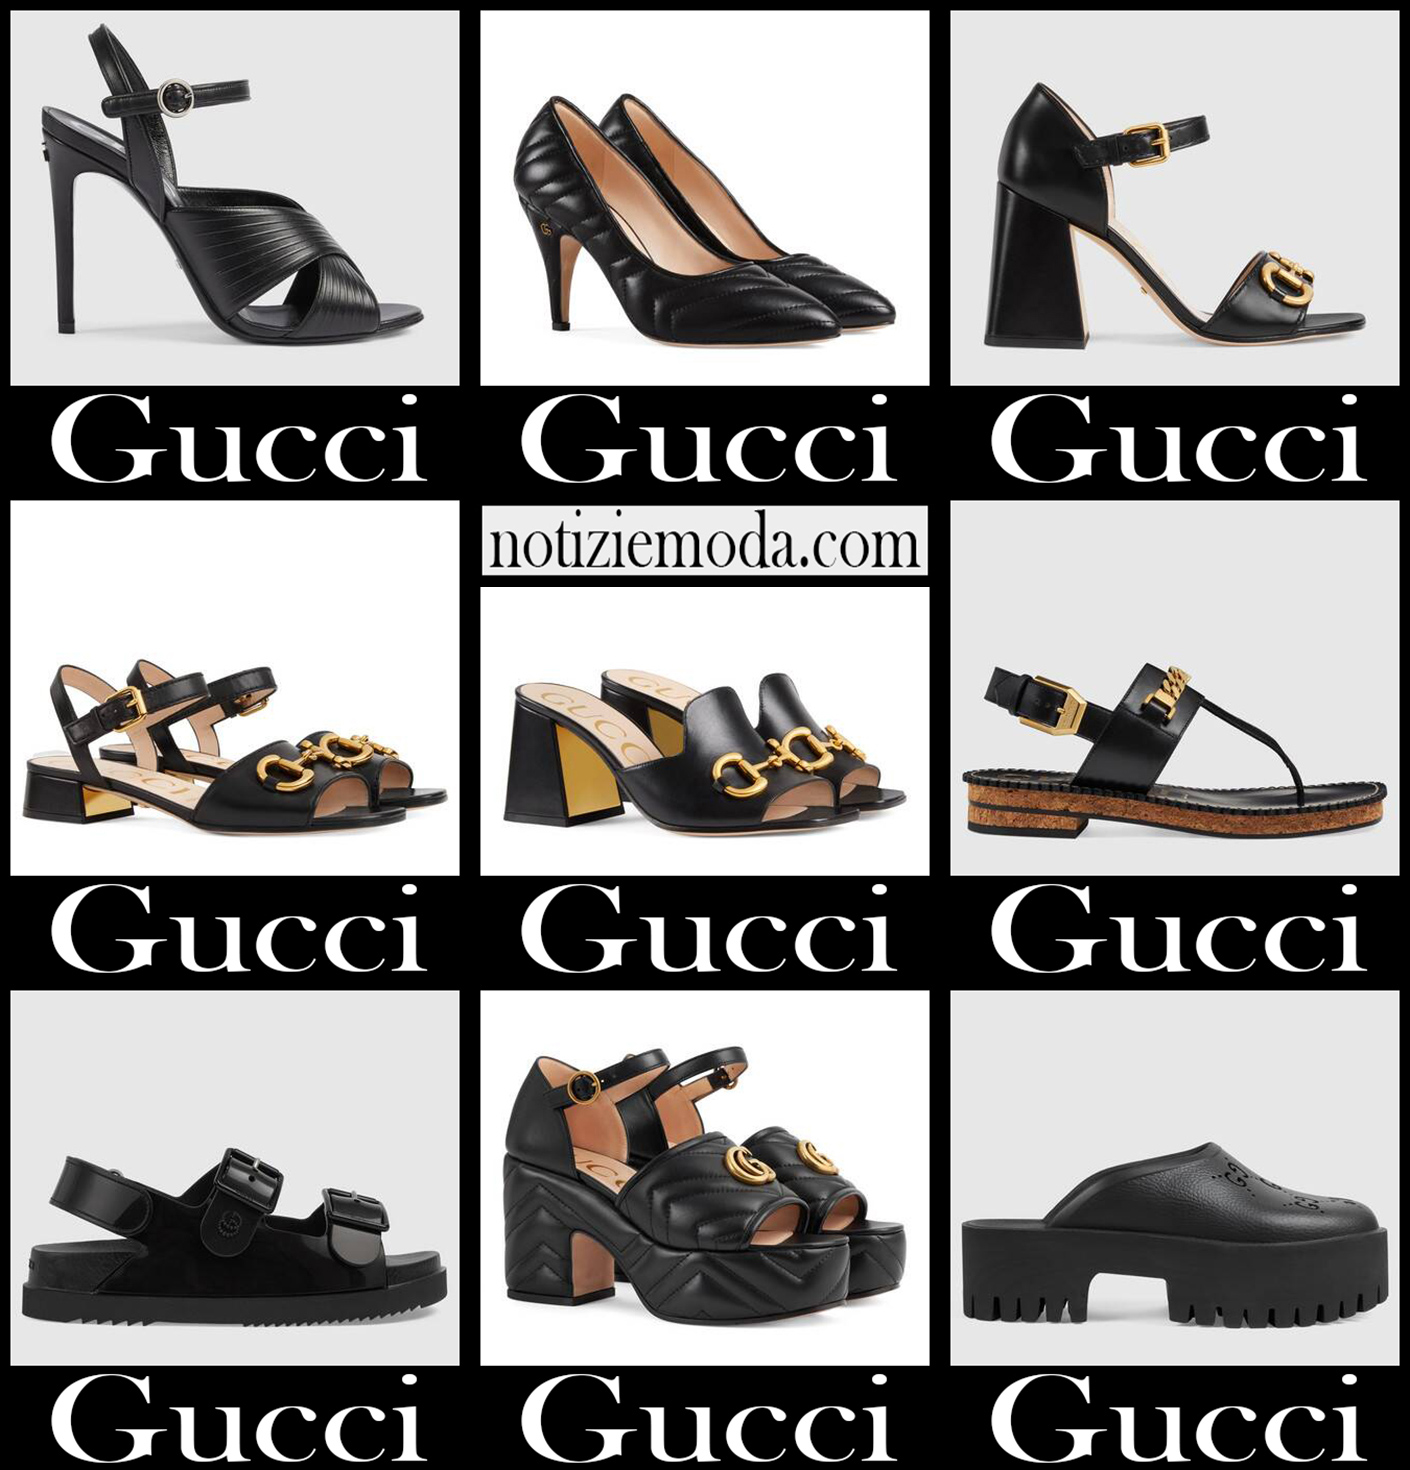 Scarpe Gucci nuovi arrivi calzature donna accessori